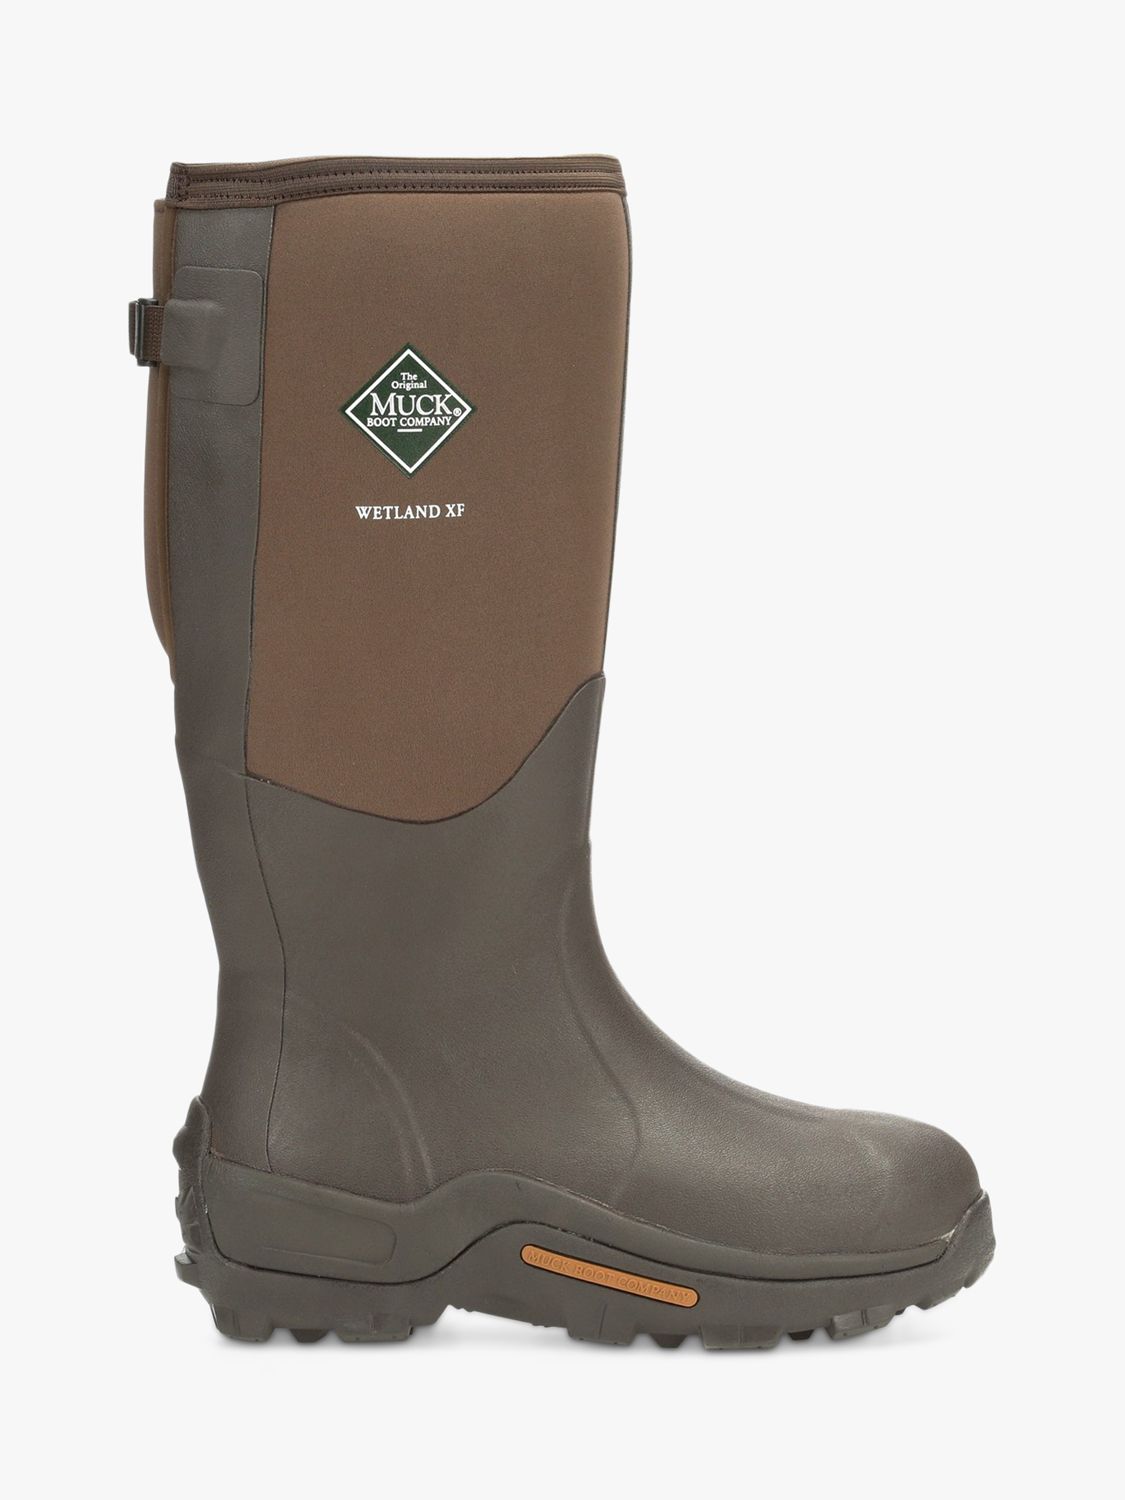 Muck Wetland XF Tall Wellington Boots, Brown, 7